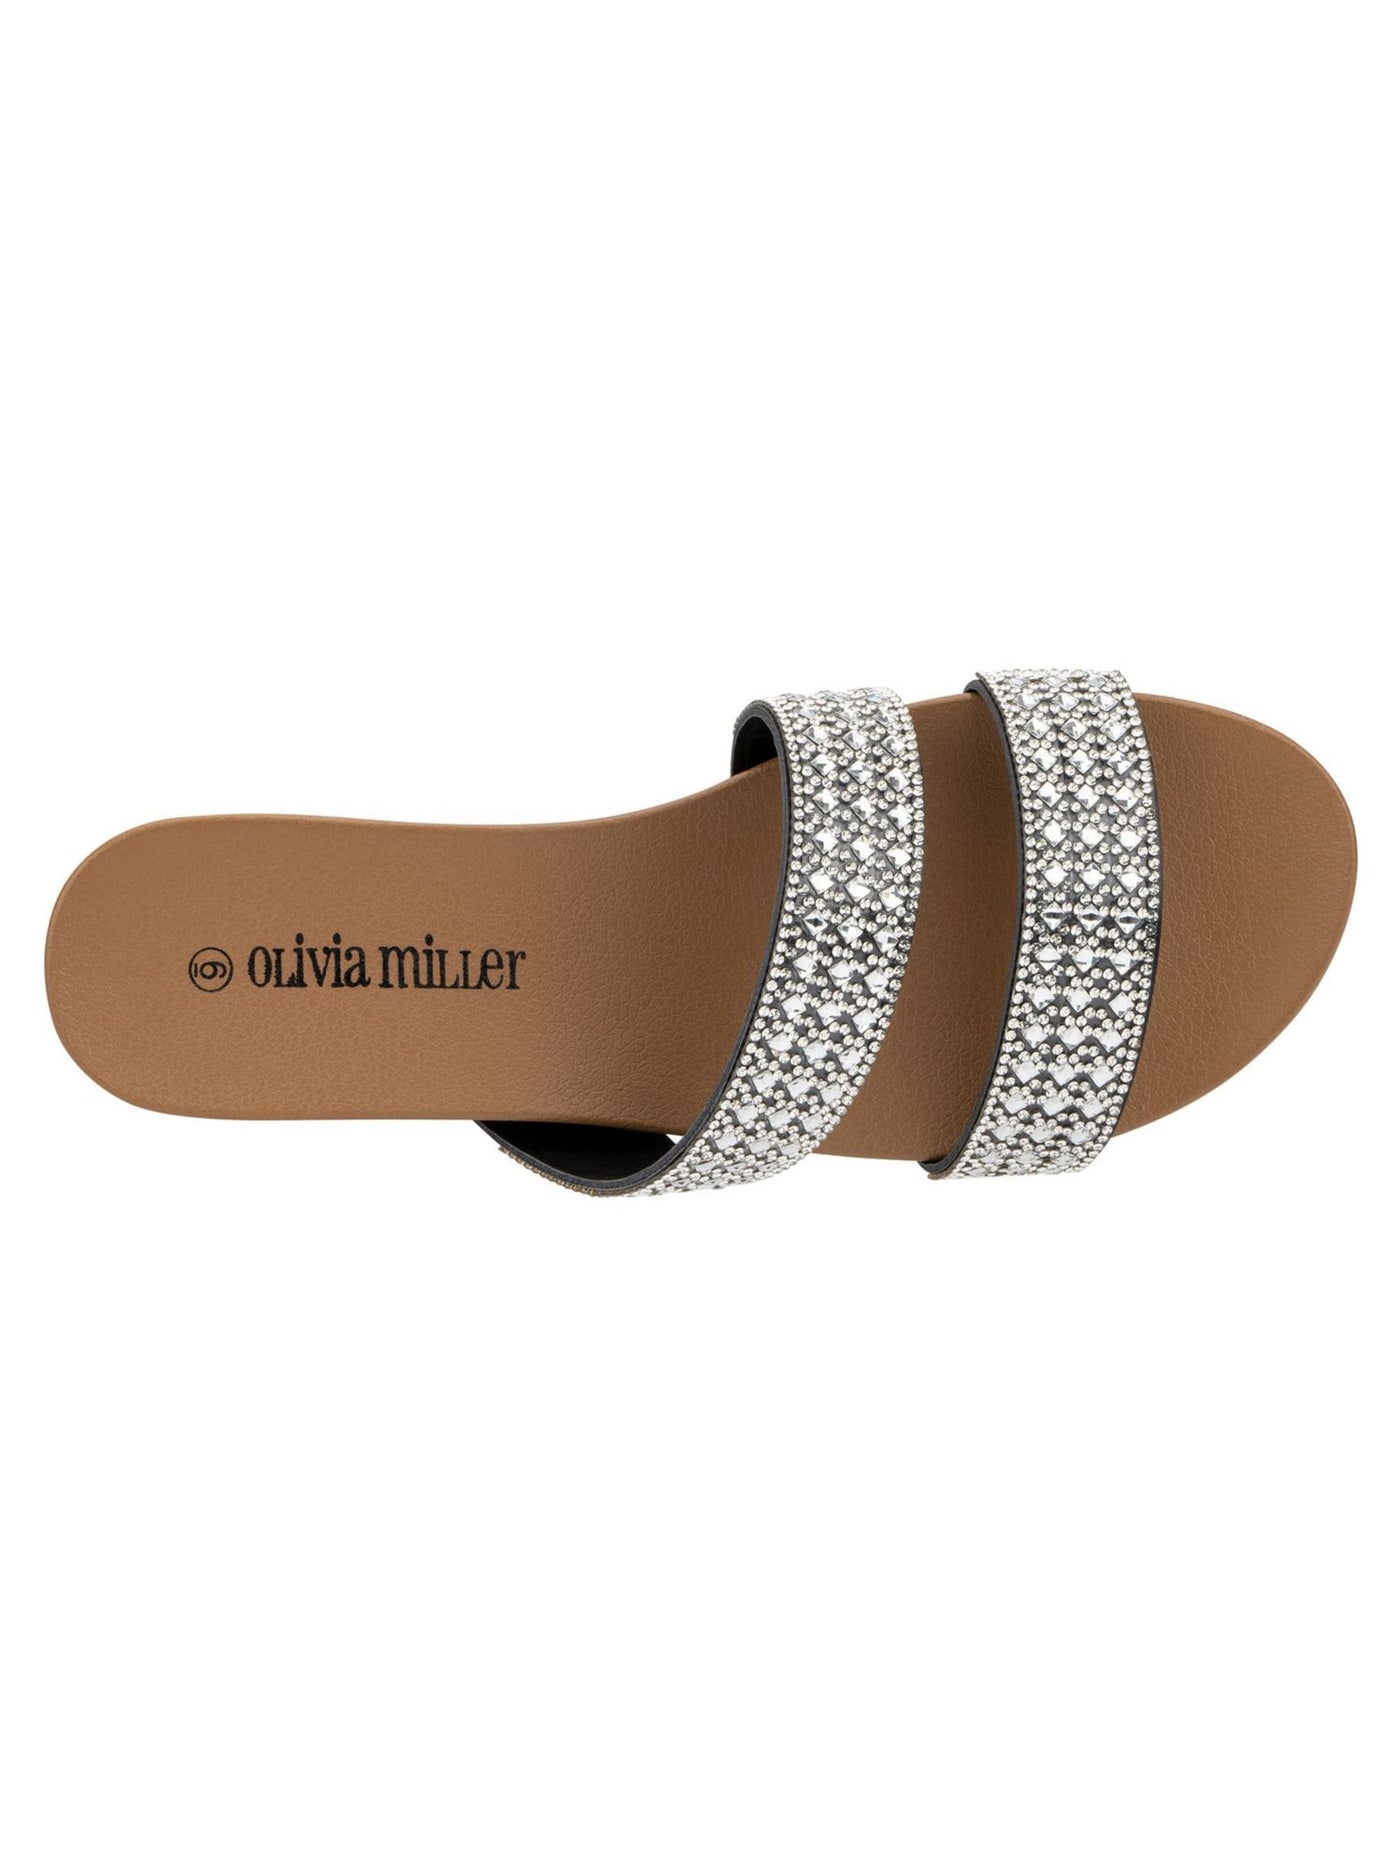 OLIVIA MILLER Womens Black Embellished Cushioned Juliette Round Toe Wedge Slip On Sandals Shoes 10